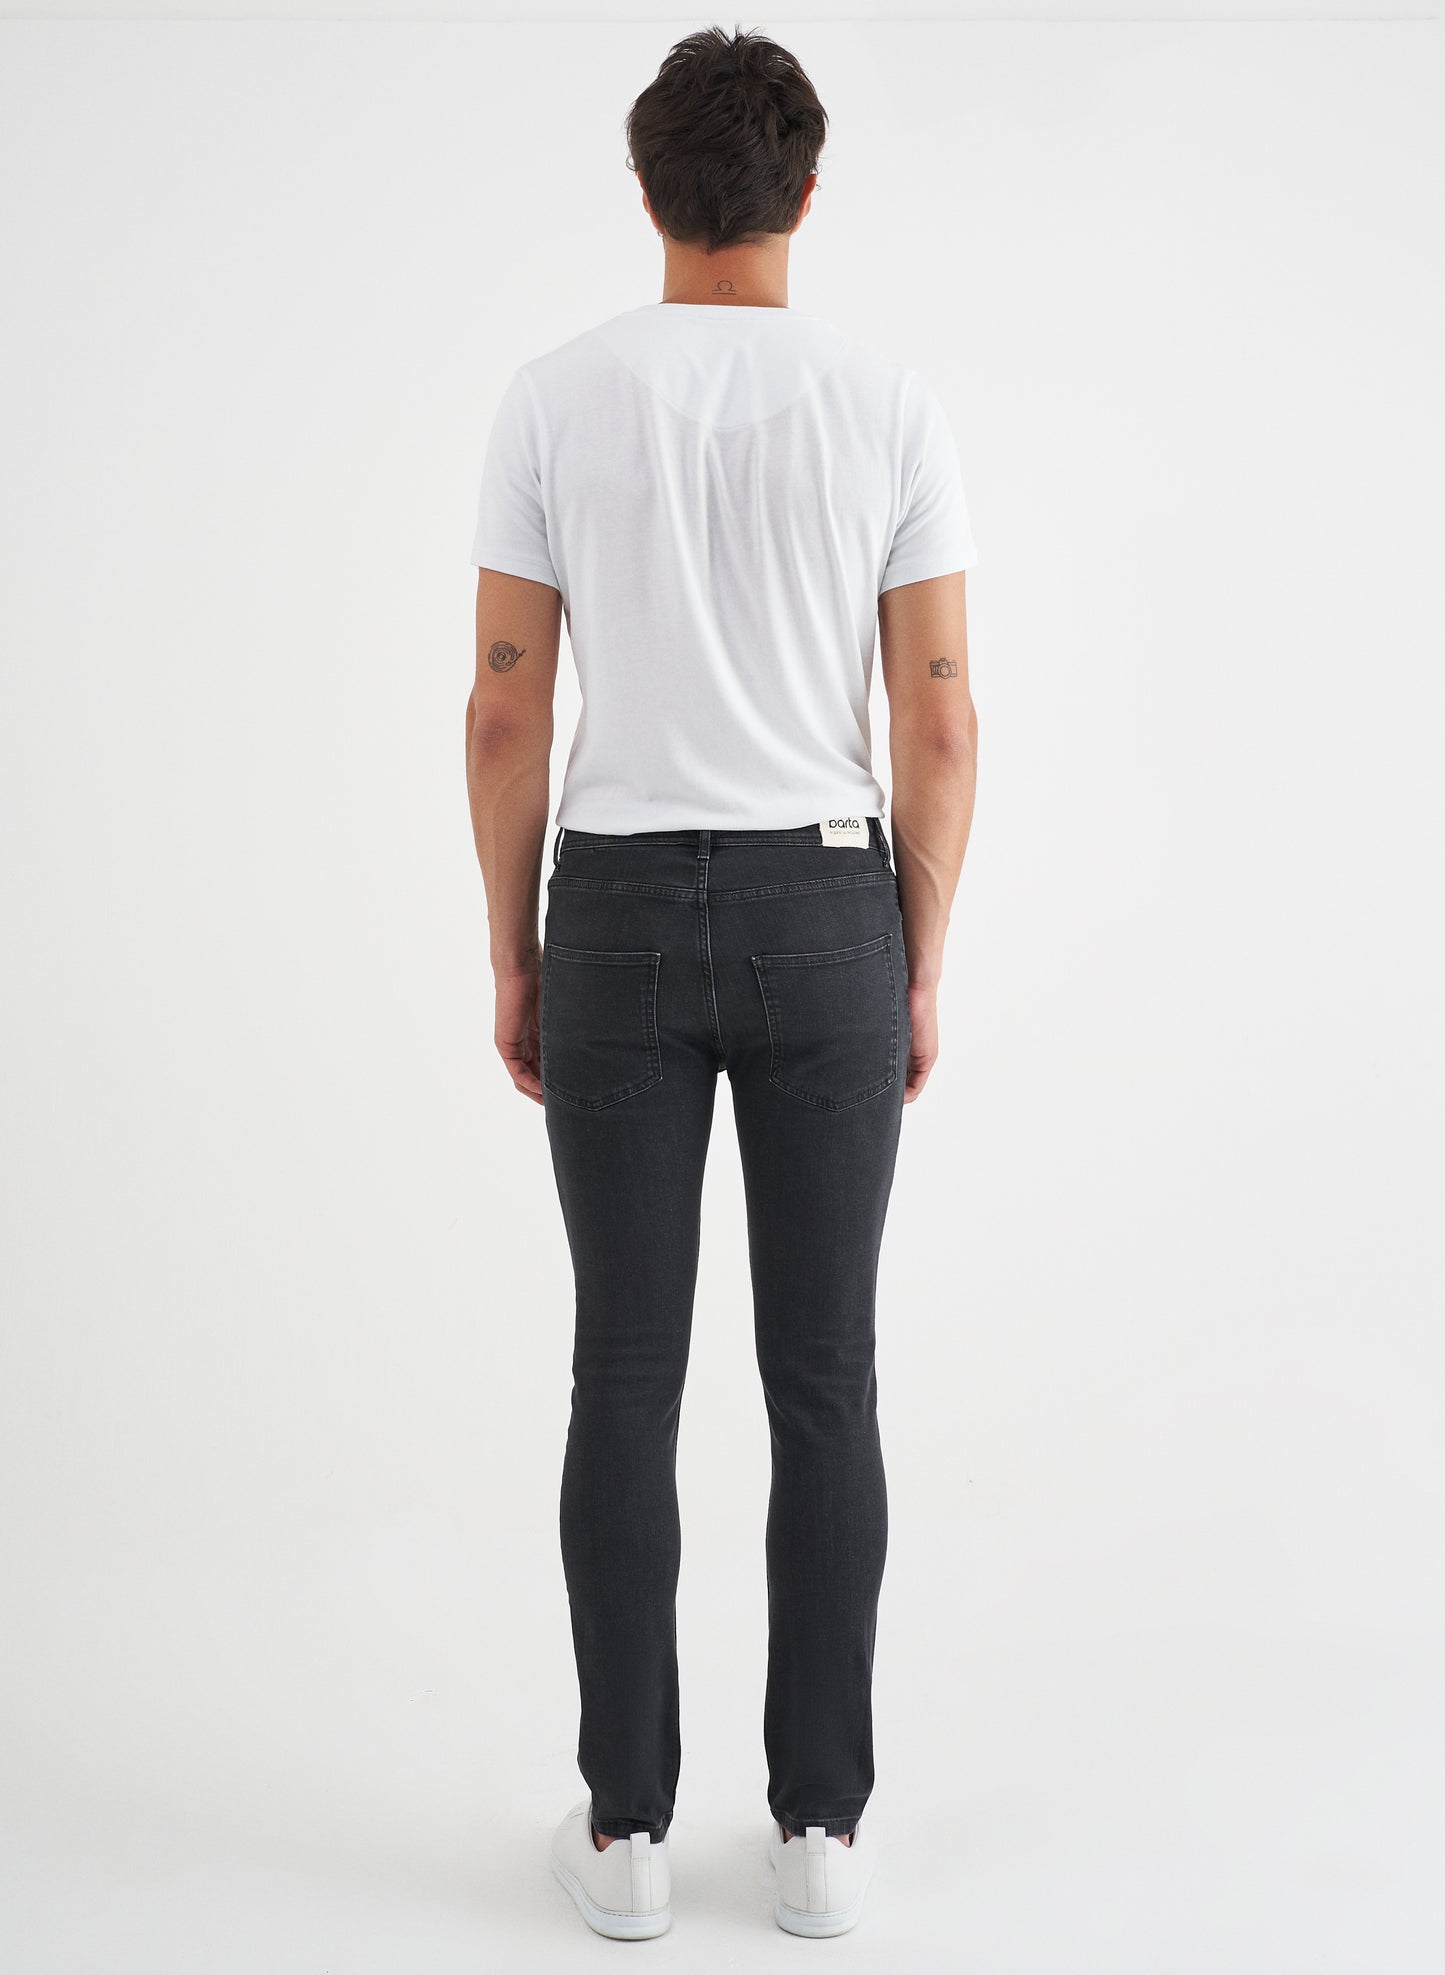 MINO - Slim Fit Denim Jeans Pant - Black Denim